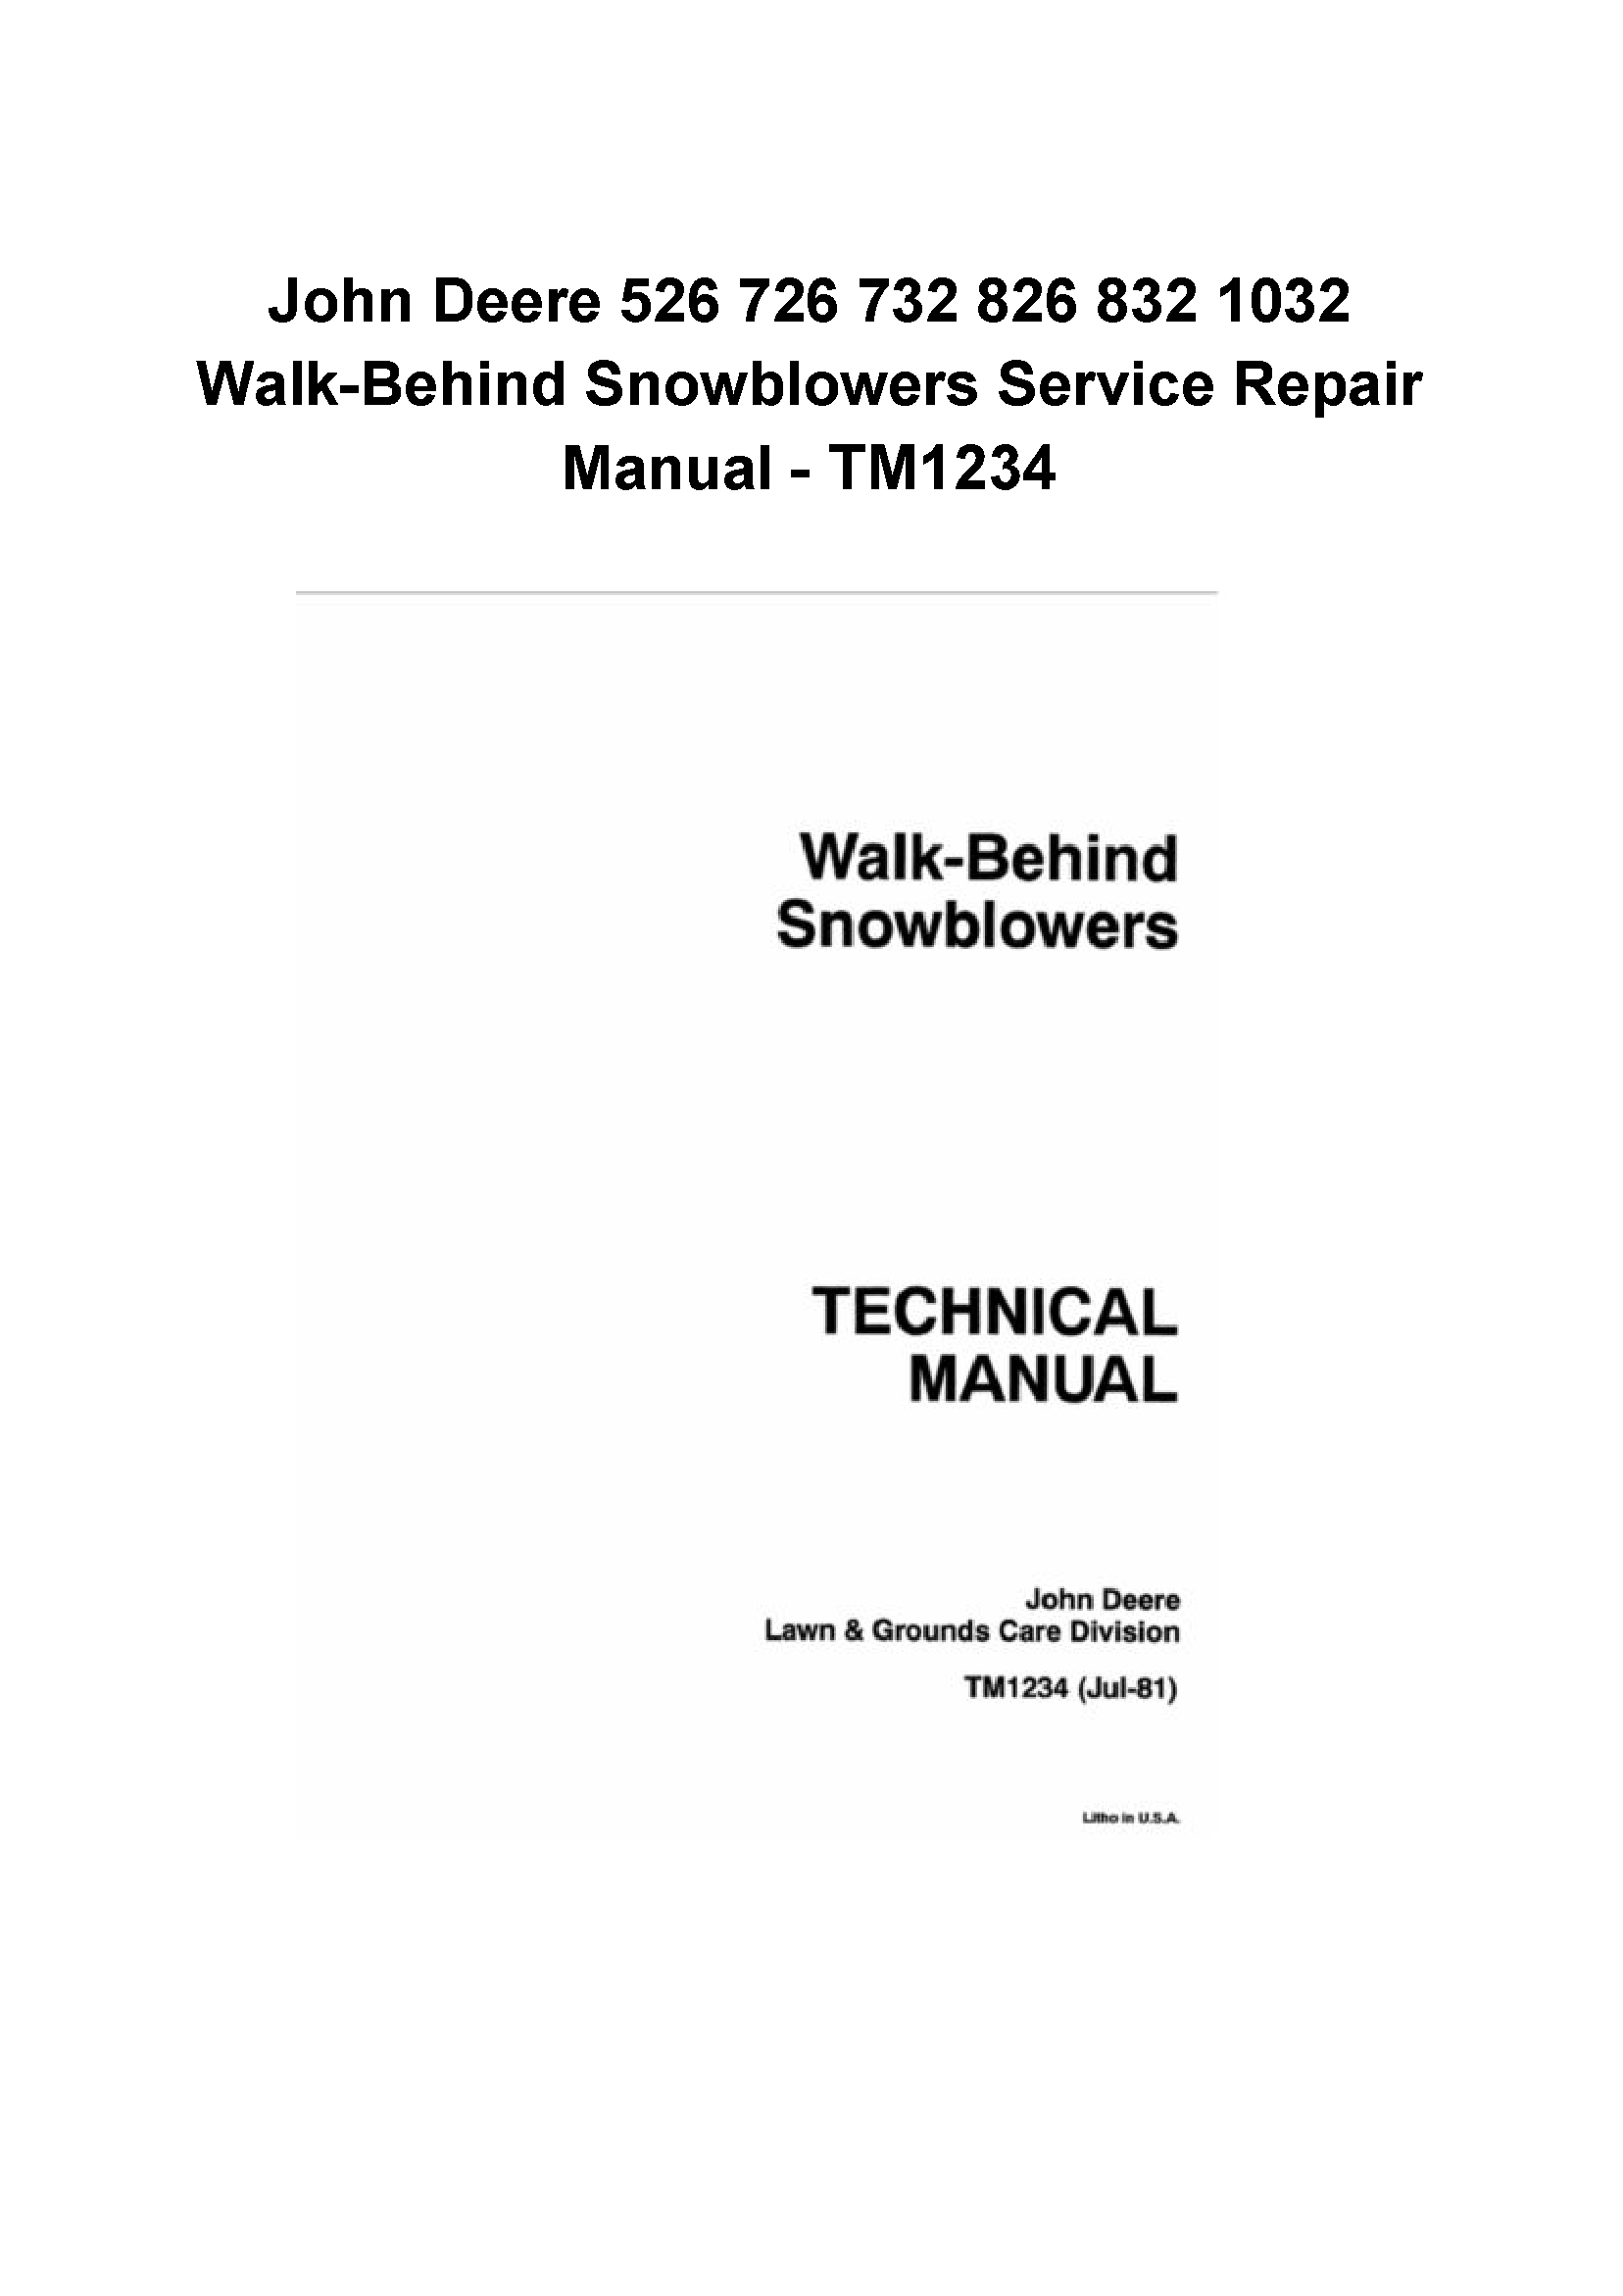 John Deere 1032 Snowblower Manual Pdf